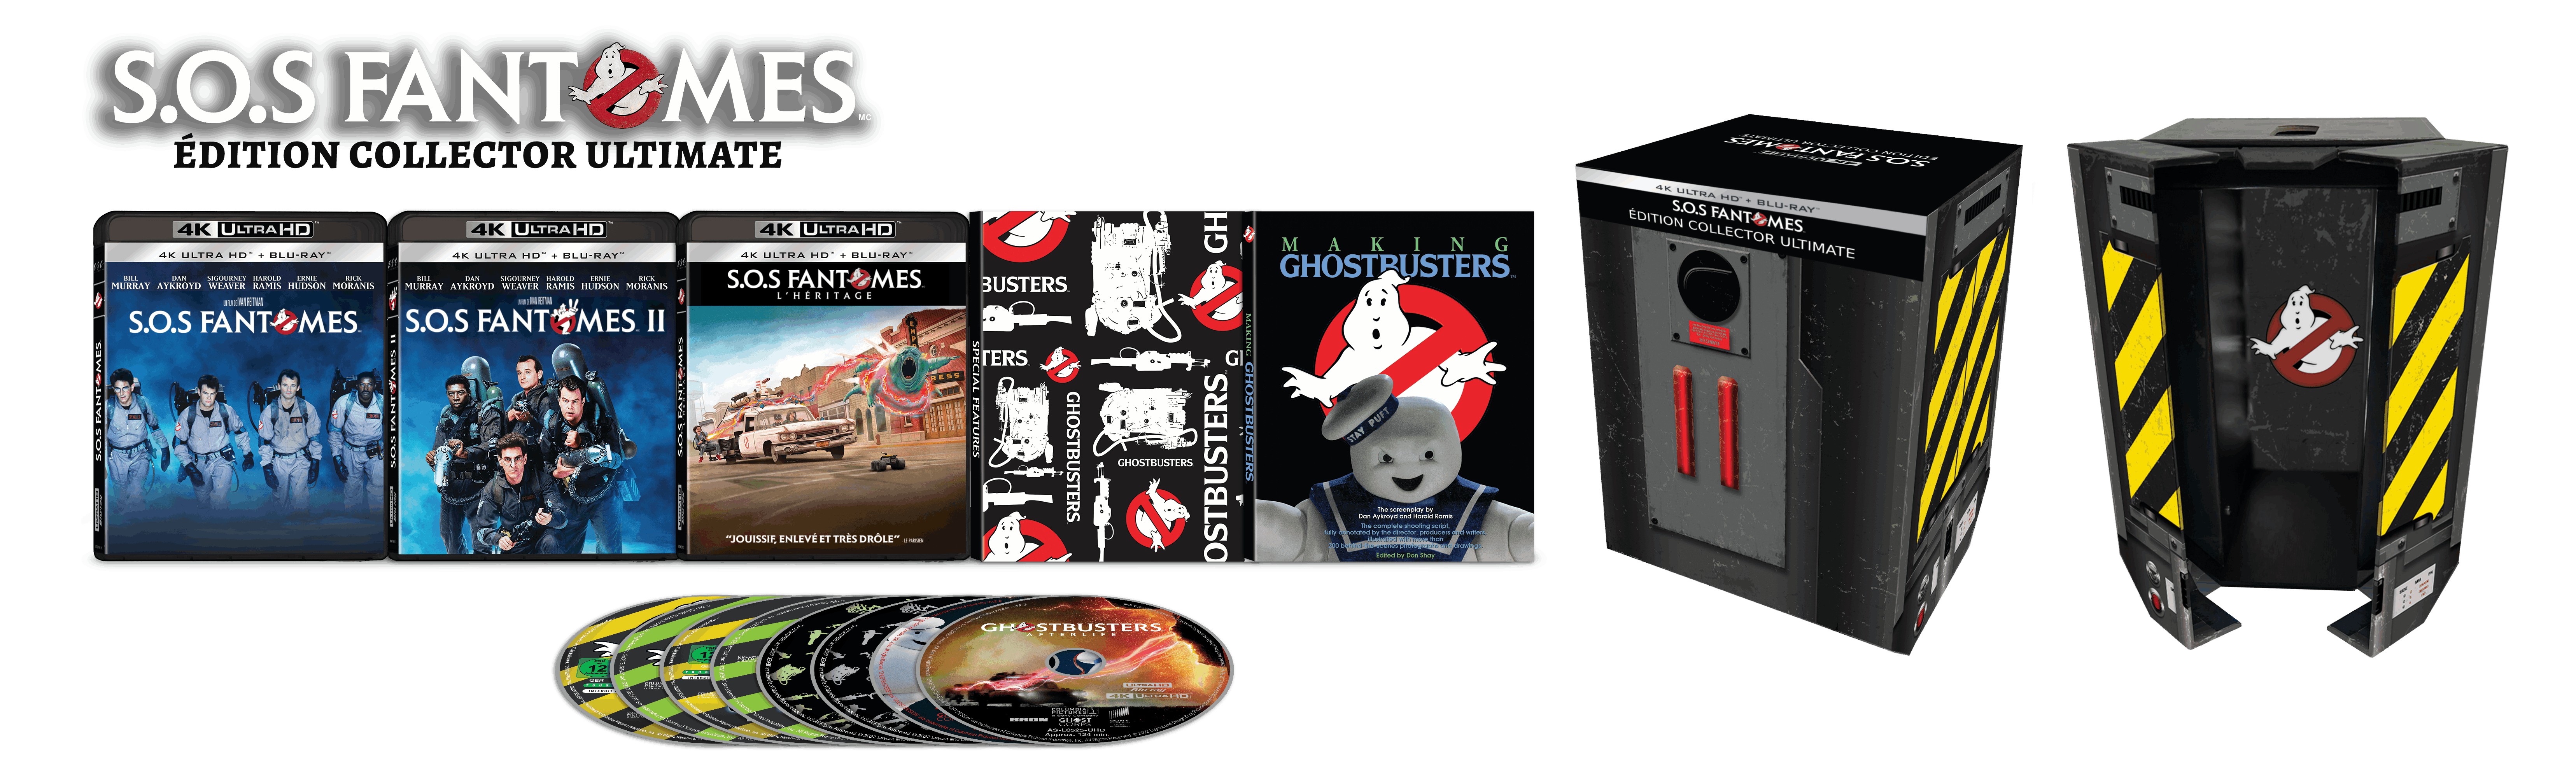 SOS Fantômes - Coffret Collector Ultimate Blu-ray 4K Ultra HD